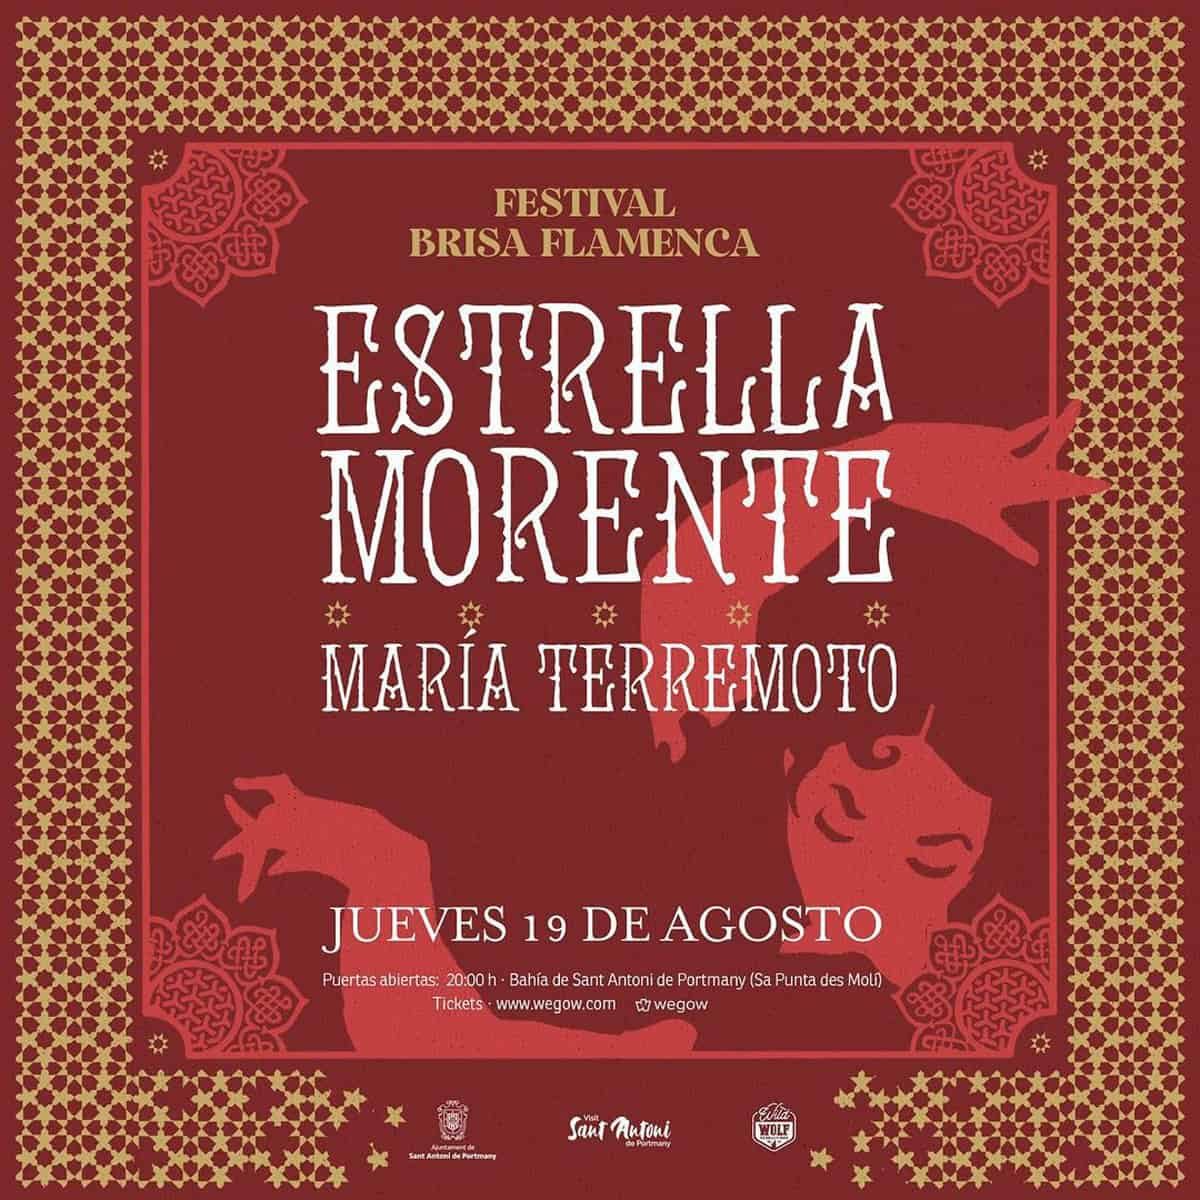 flamenco-breeze-festival-ibiza-2021-star-morente-welcometoibiza